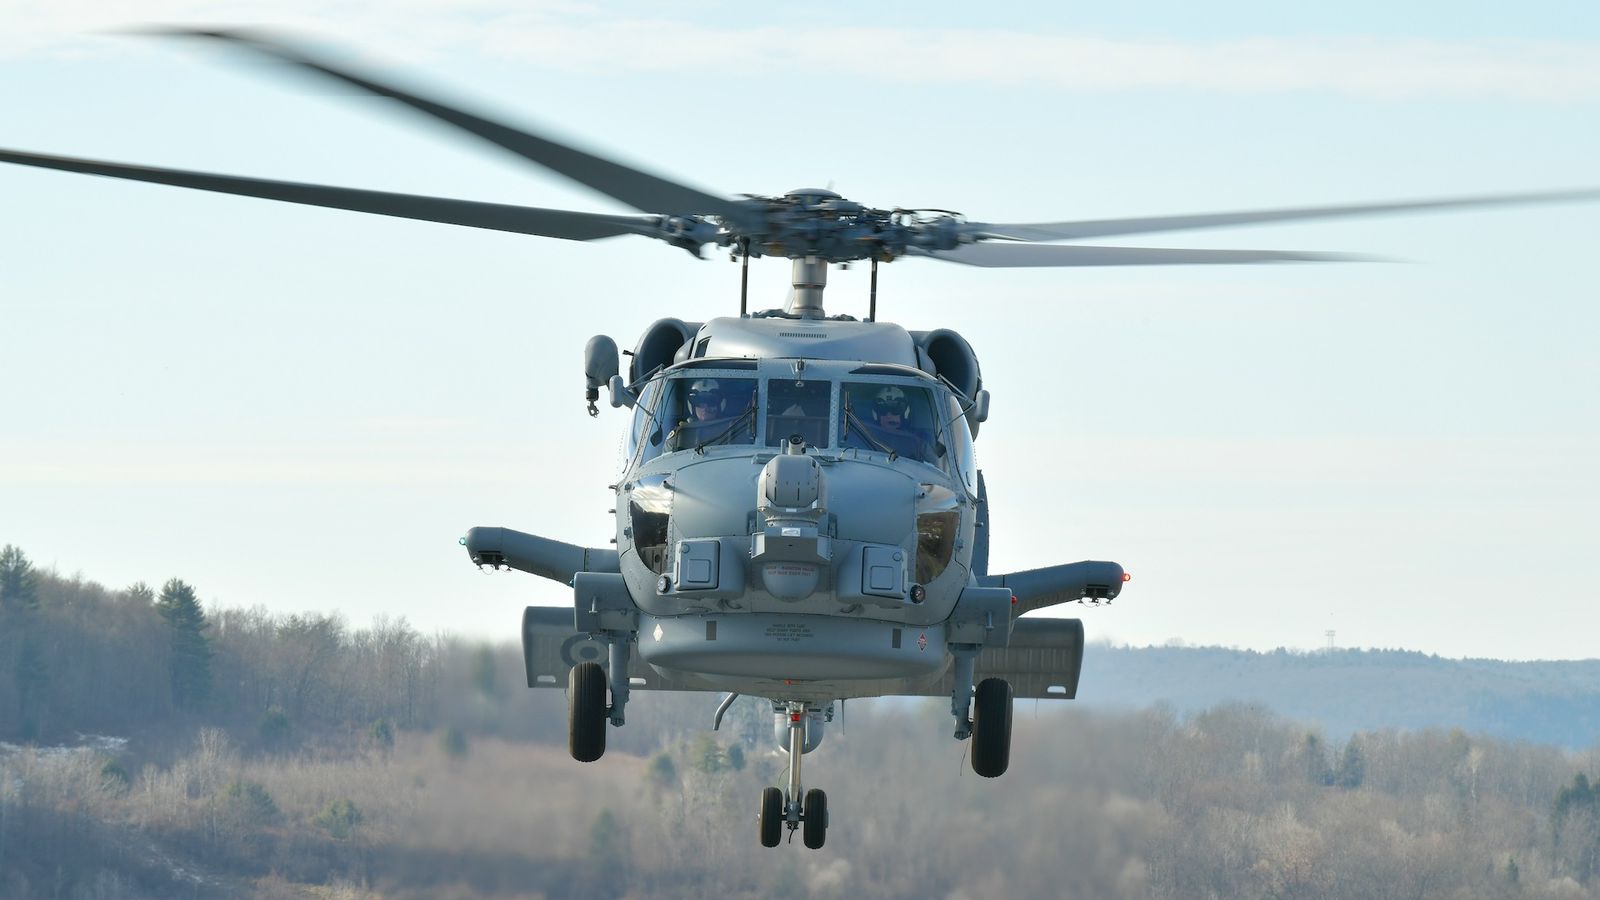 MH-60 Romeo